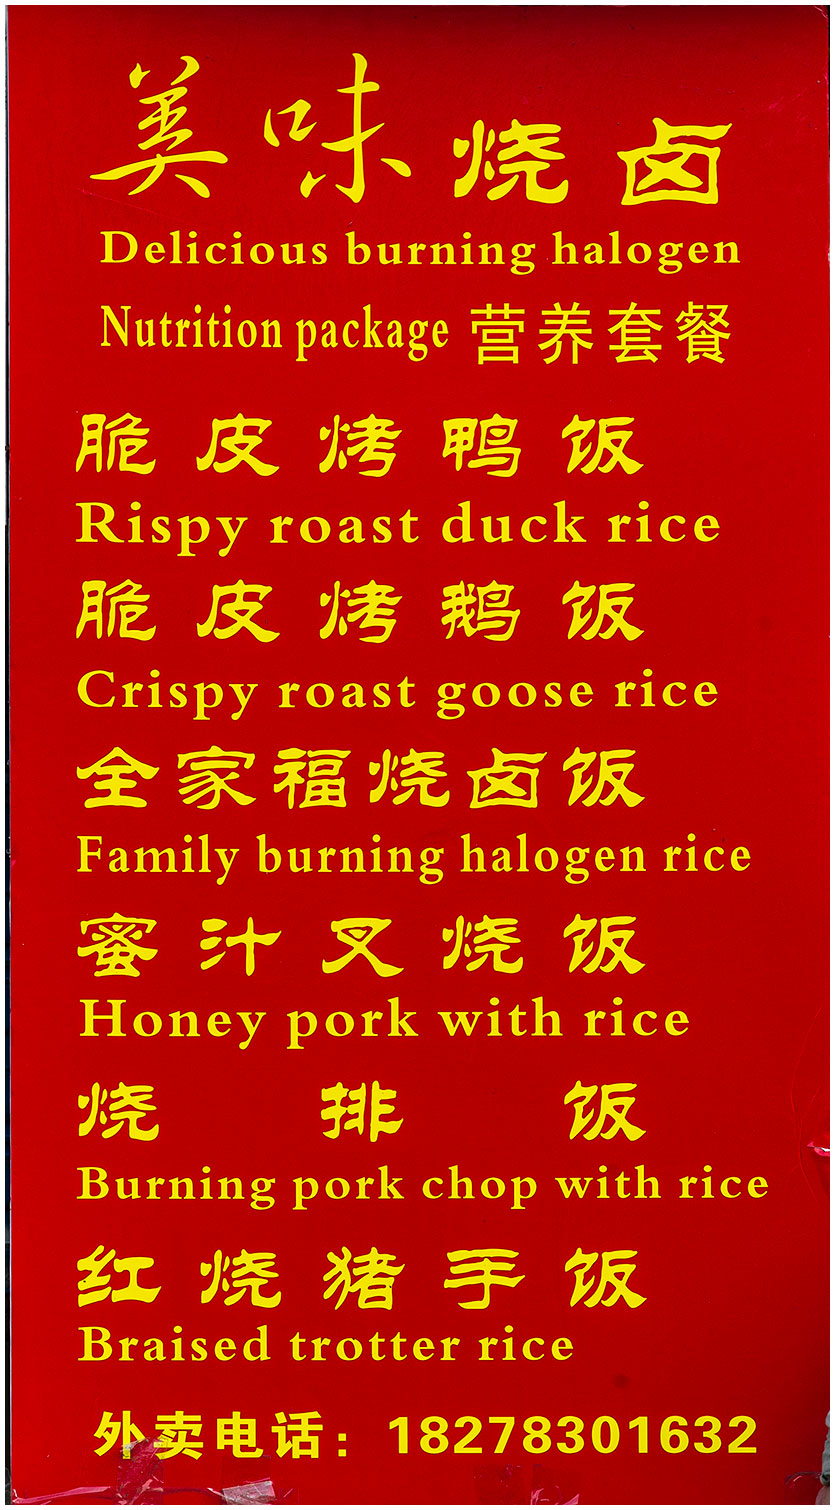 Family Burning Halogen Rice